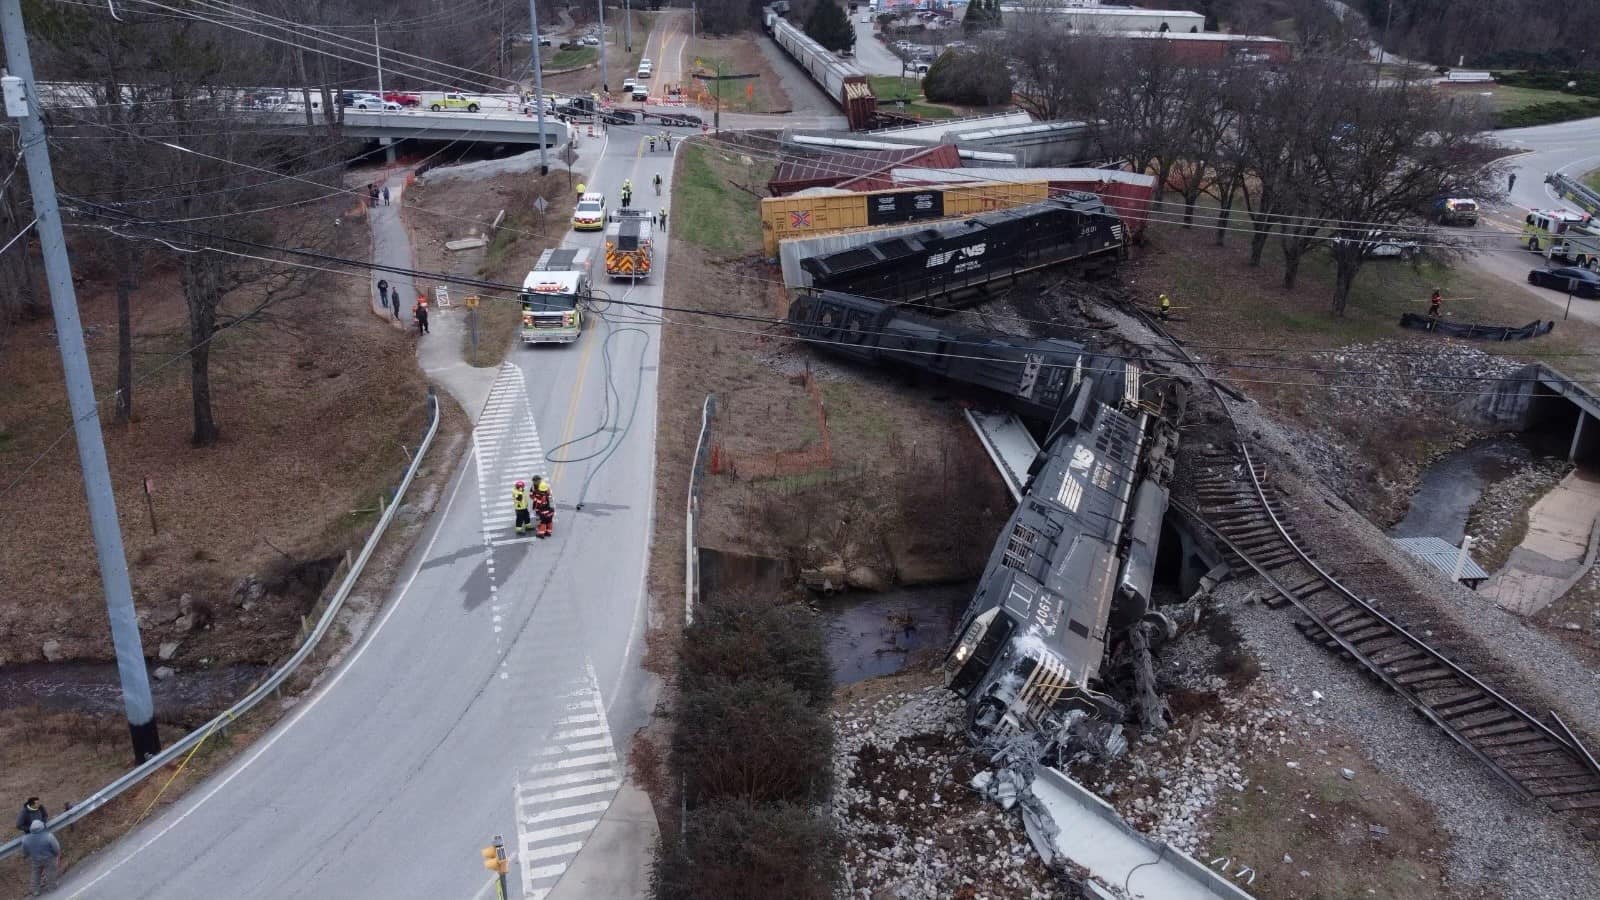 Two injured in East Tennessee train derailment WBBJ TV